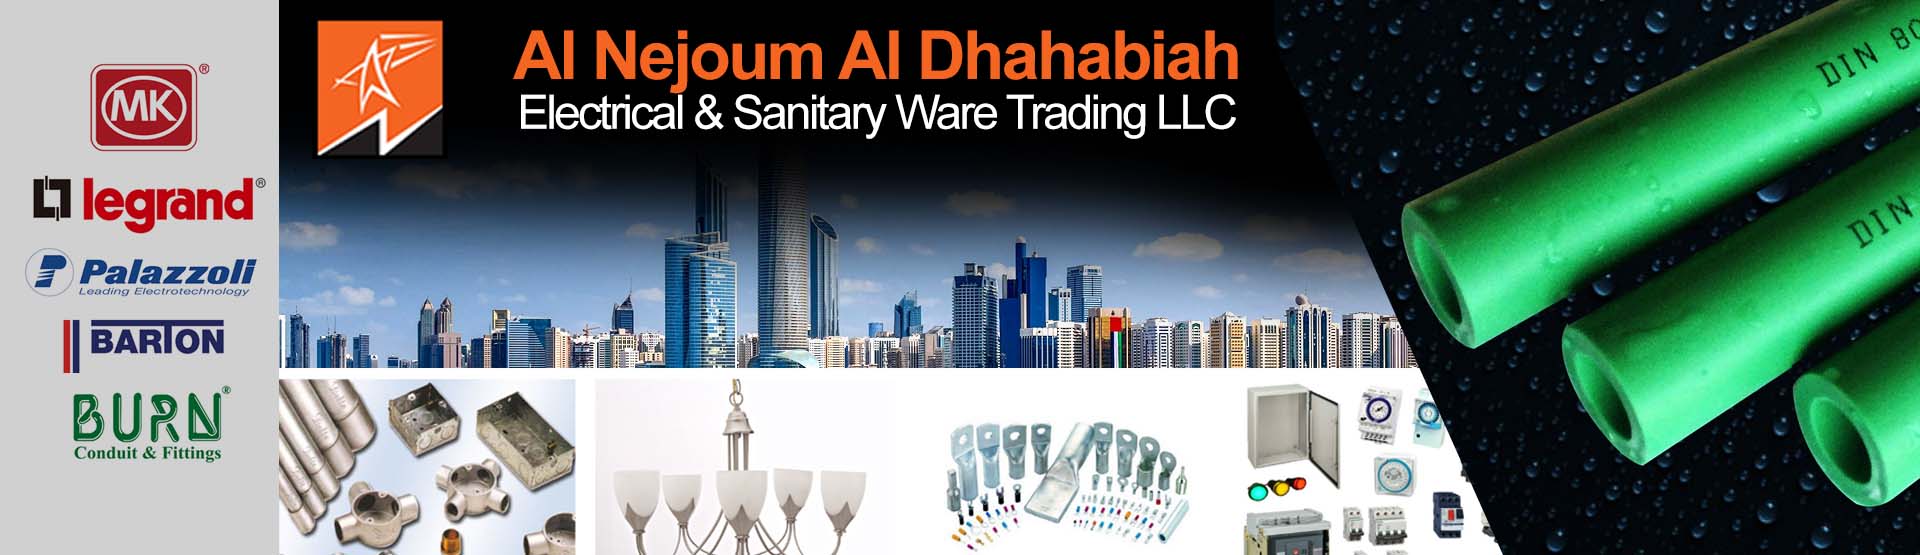 AL NEJOUM AL DHAHABIAH ELECTRICAL & SANITARY WARE TRADING LLC